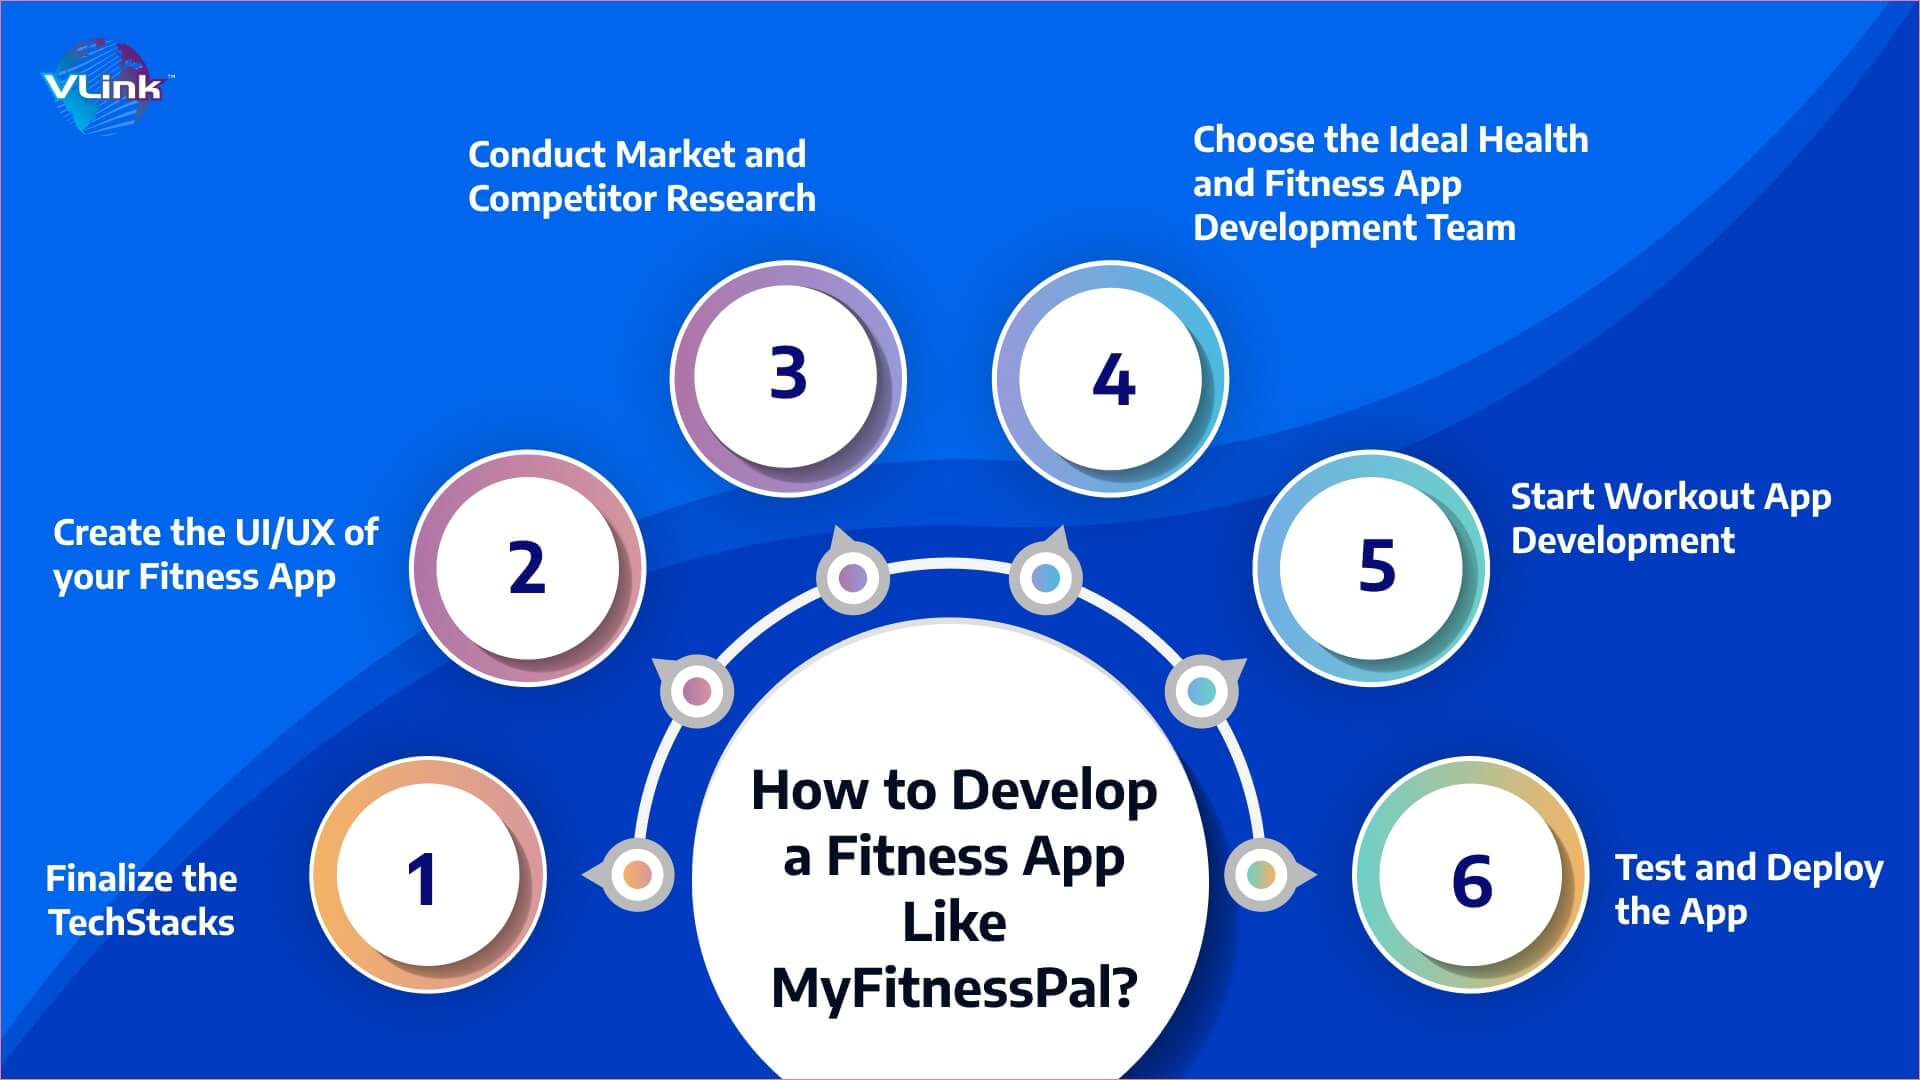 How do you Develop a Fitness App like MyFitnessPal